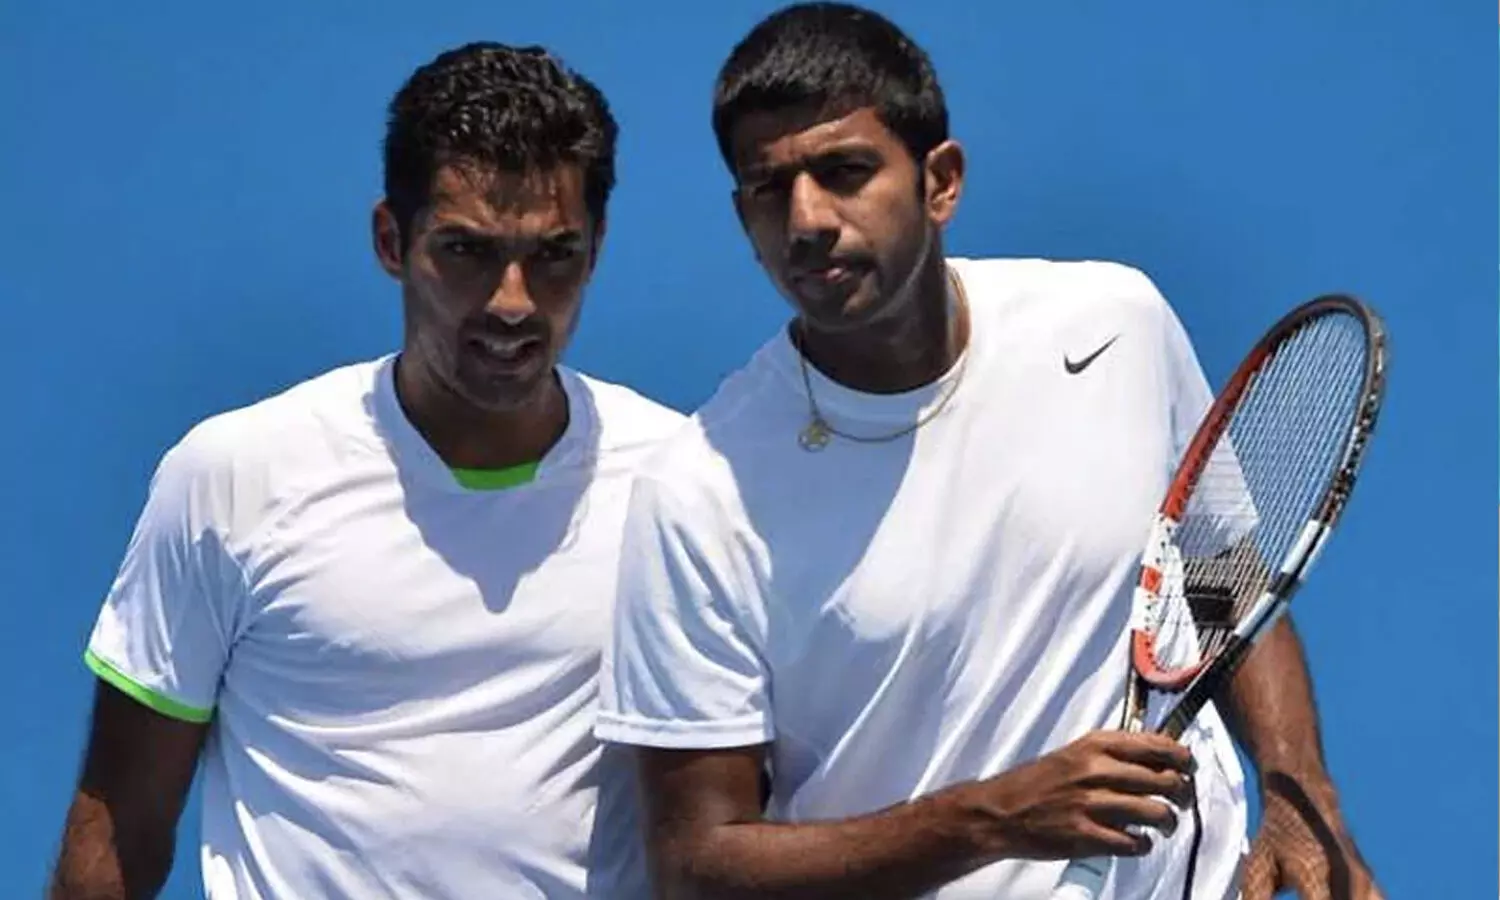 Tennis Indo-Pak Express Rohan Bopanna and Aisam Qureshi falls short in Sofia Open LIVE blog